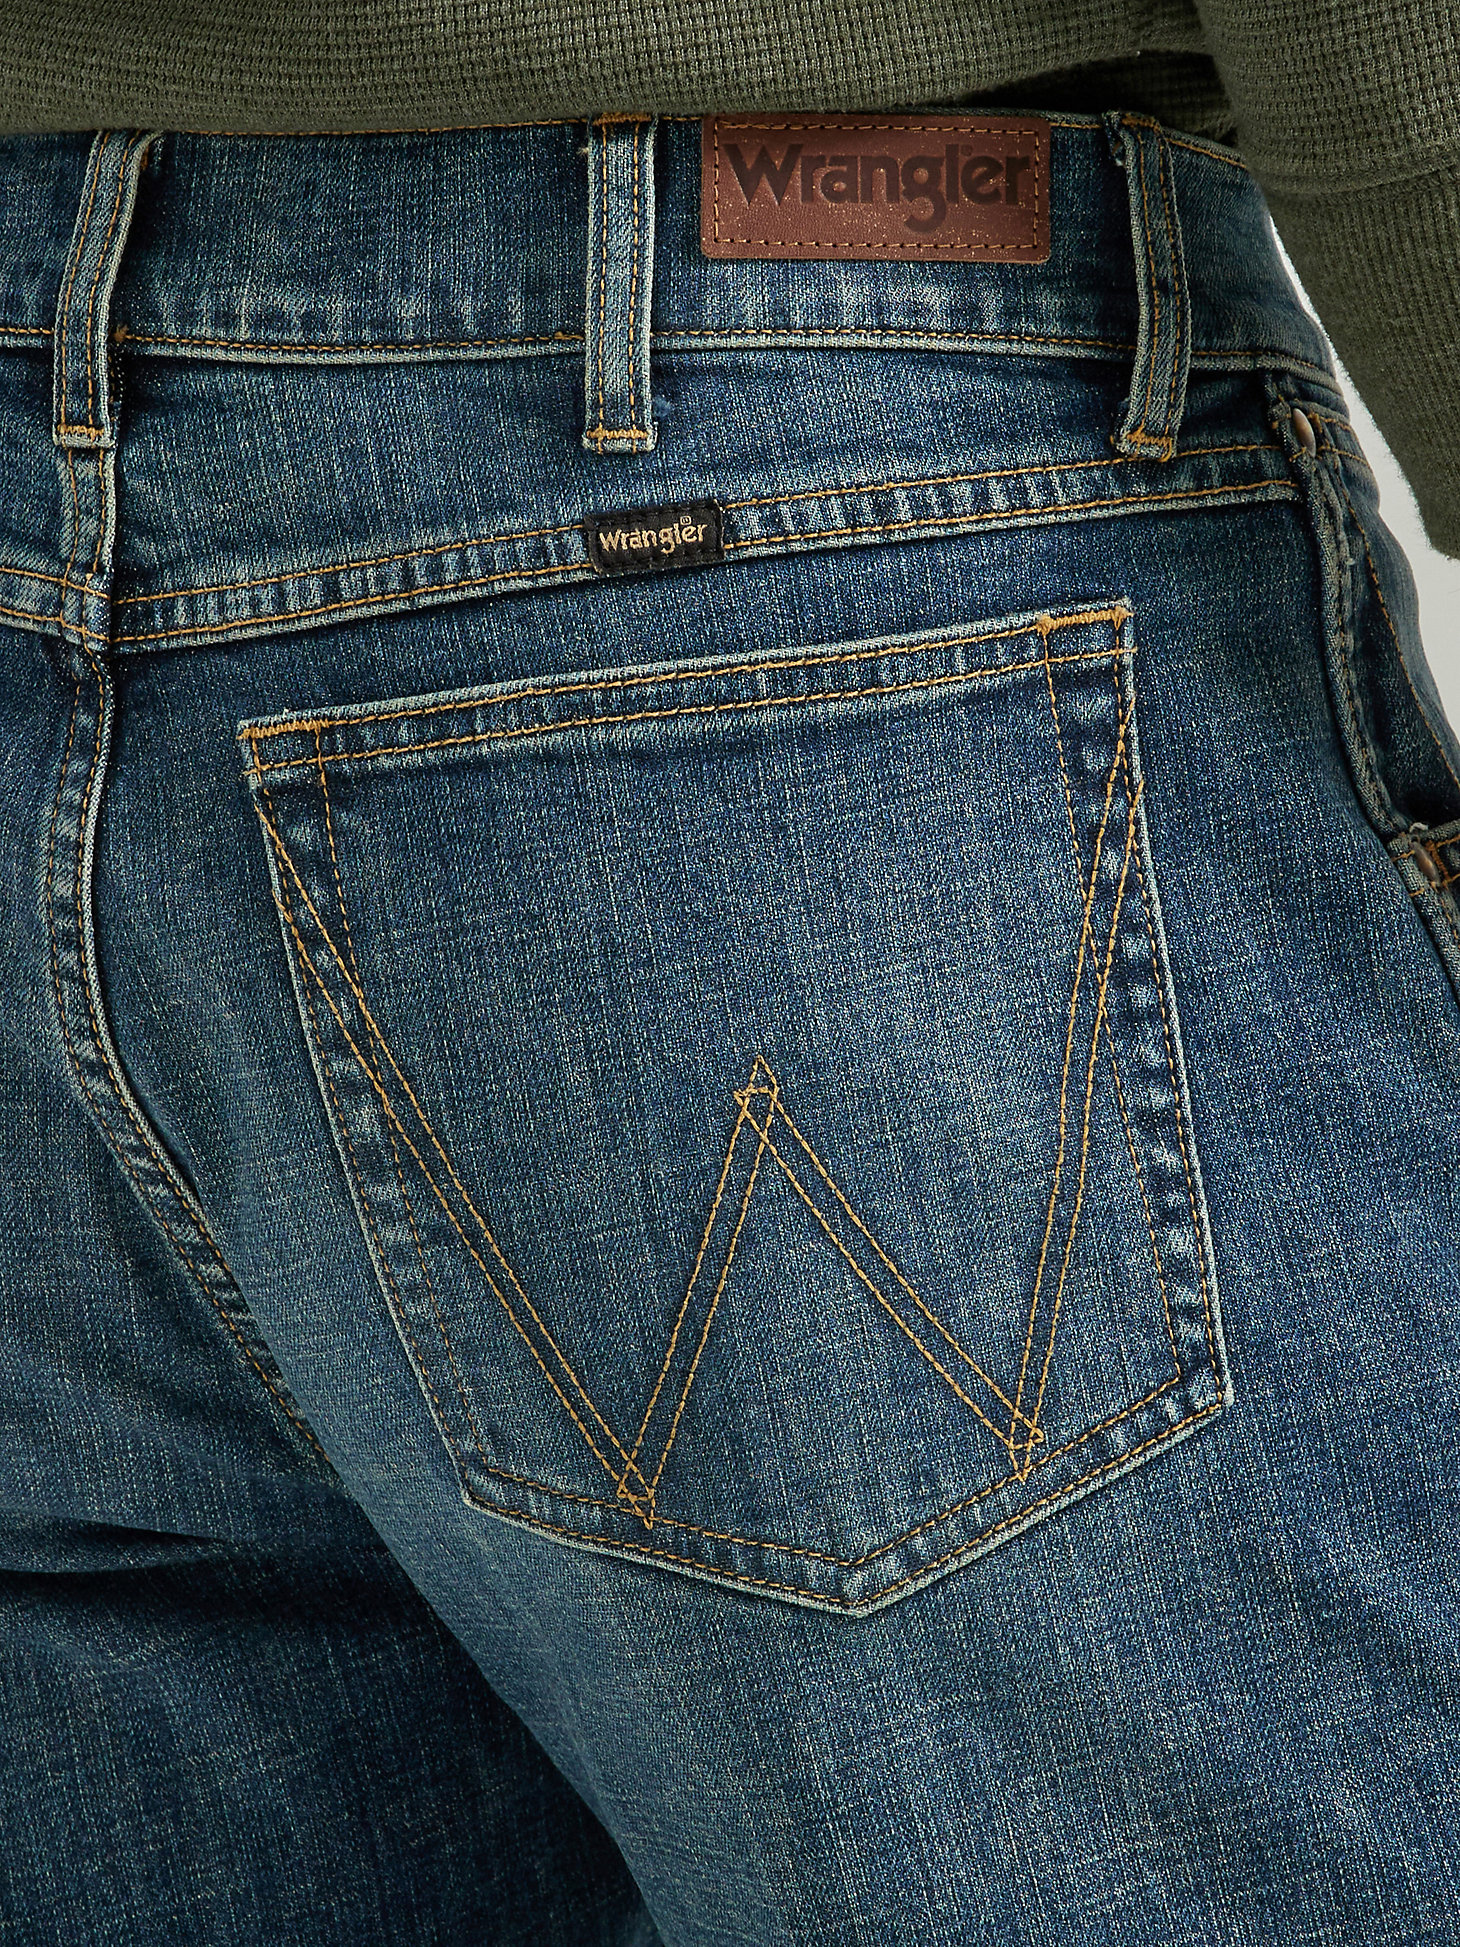 Men's Tapered Regular Fit Jean in Medium Wash alternative view 4